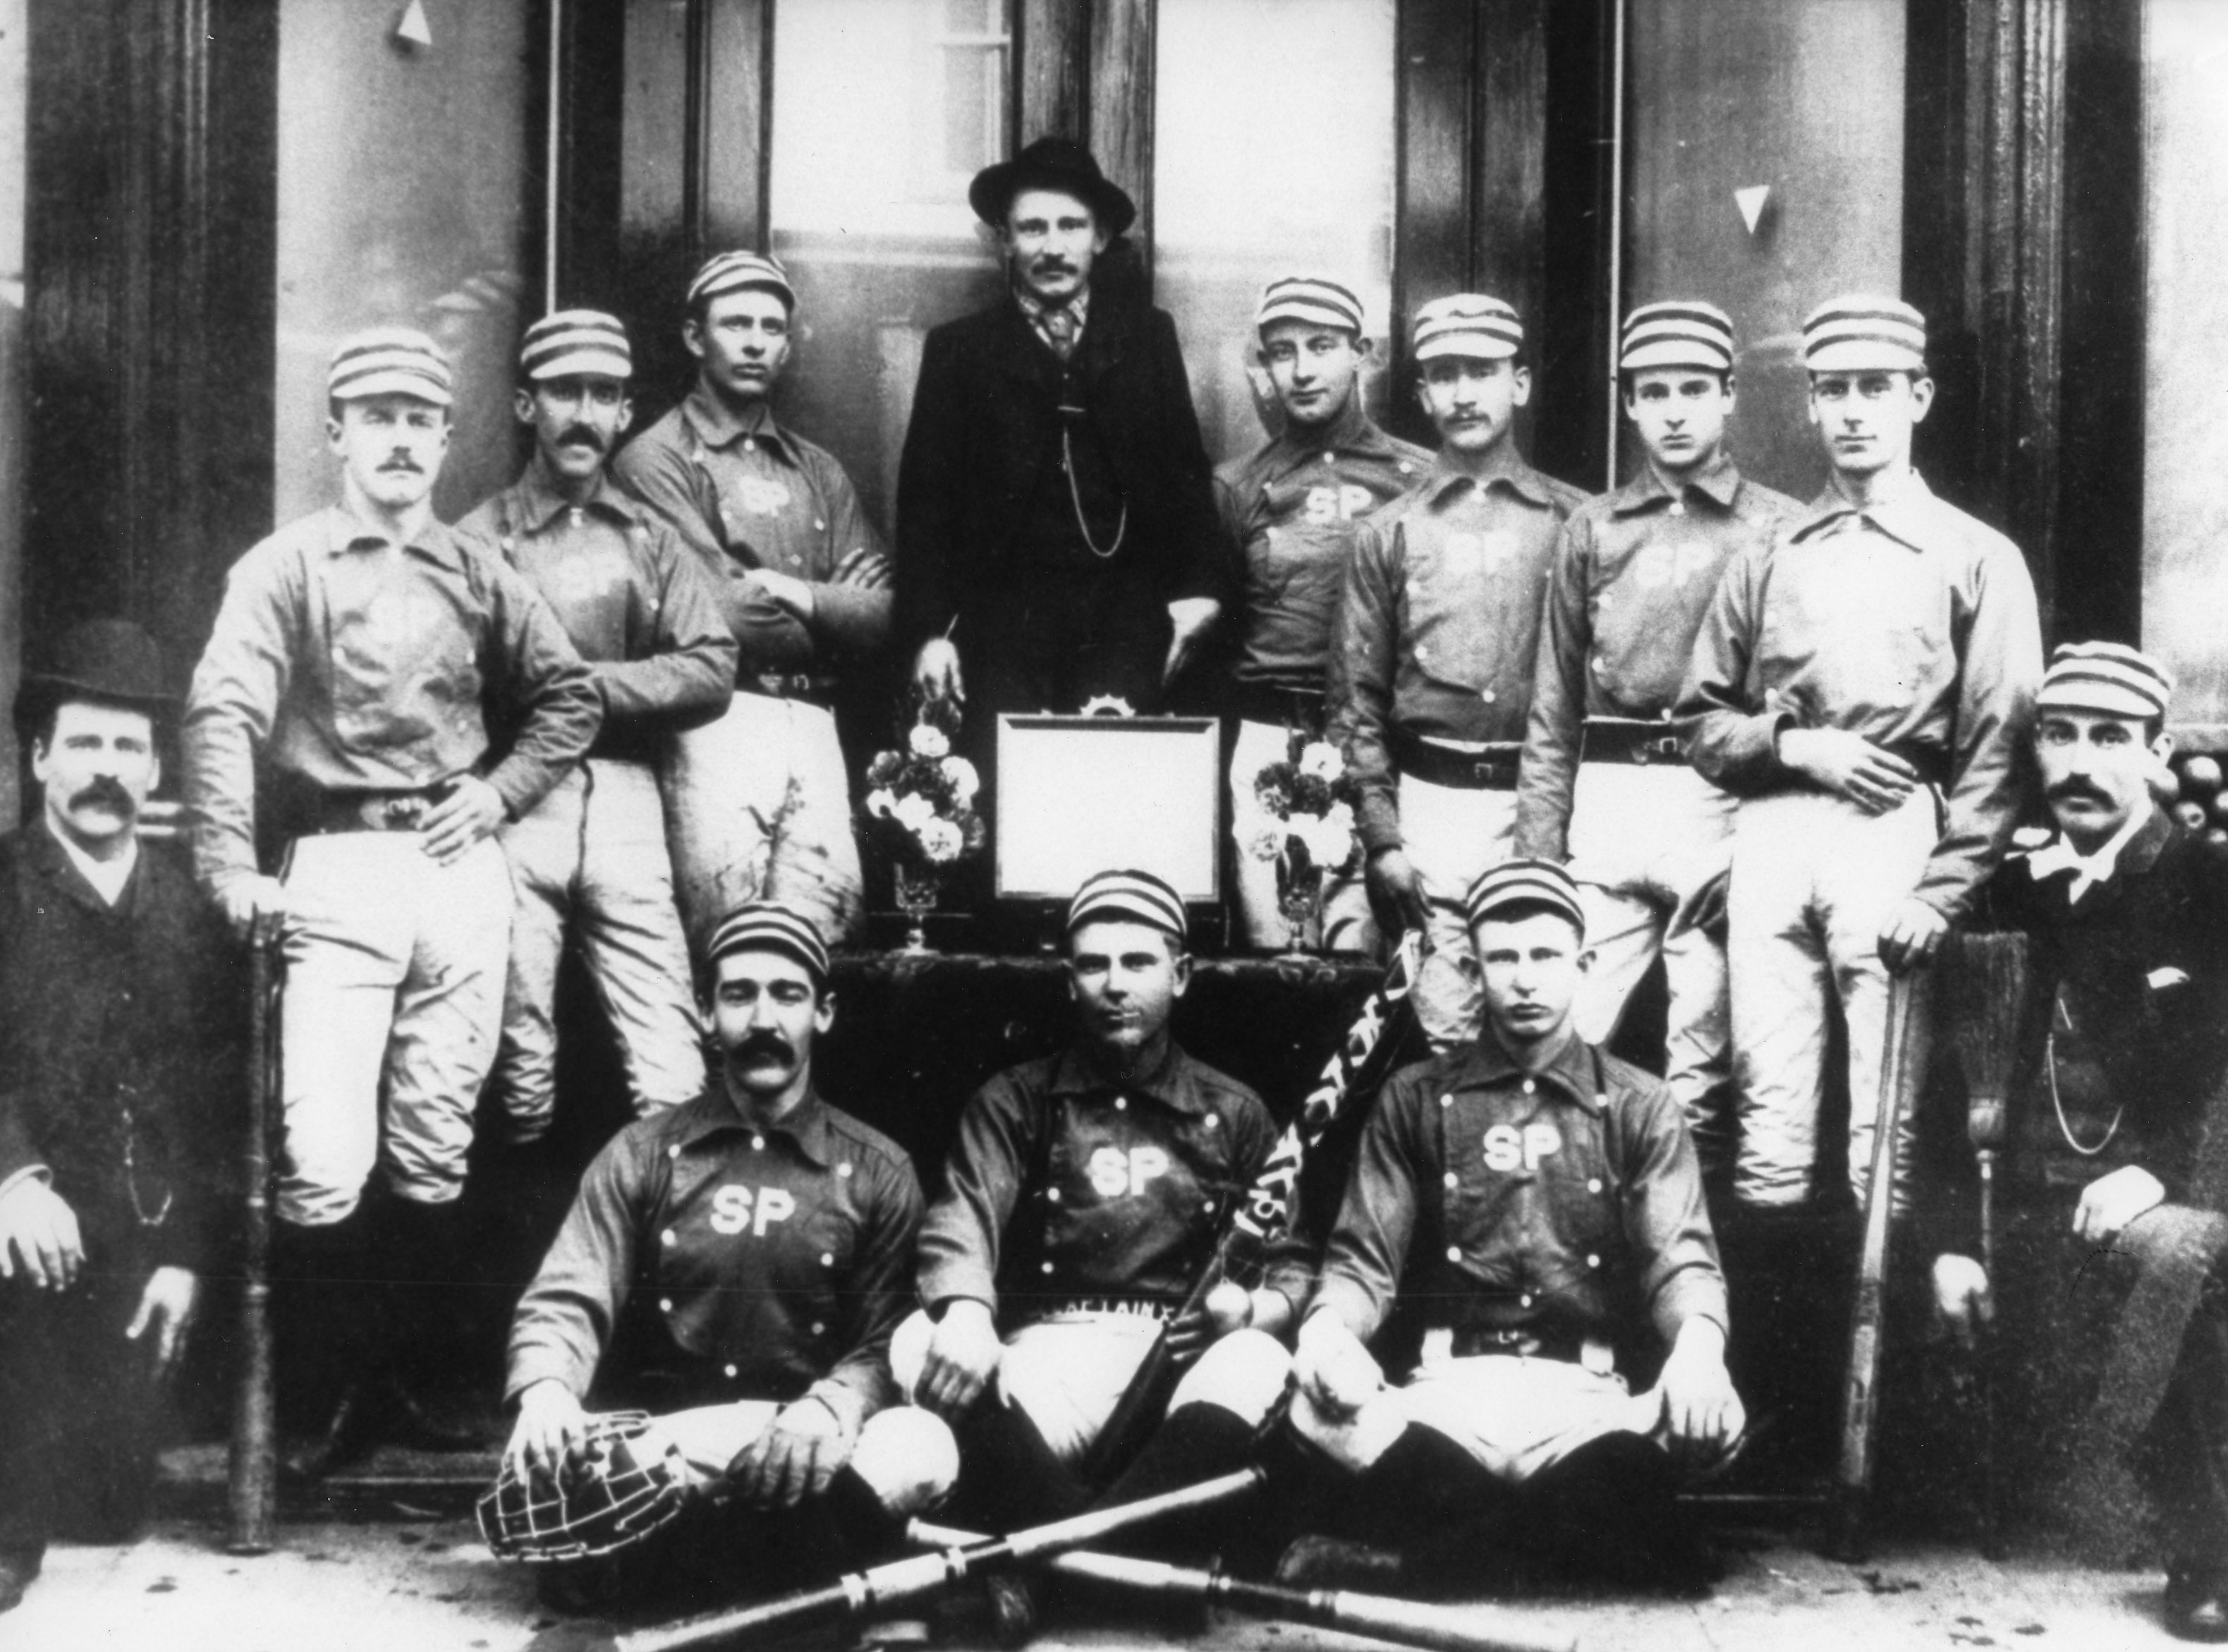 Silver Plume Championship Mountain baseball team 1889